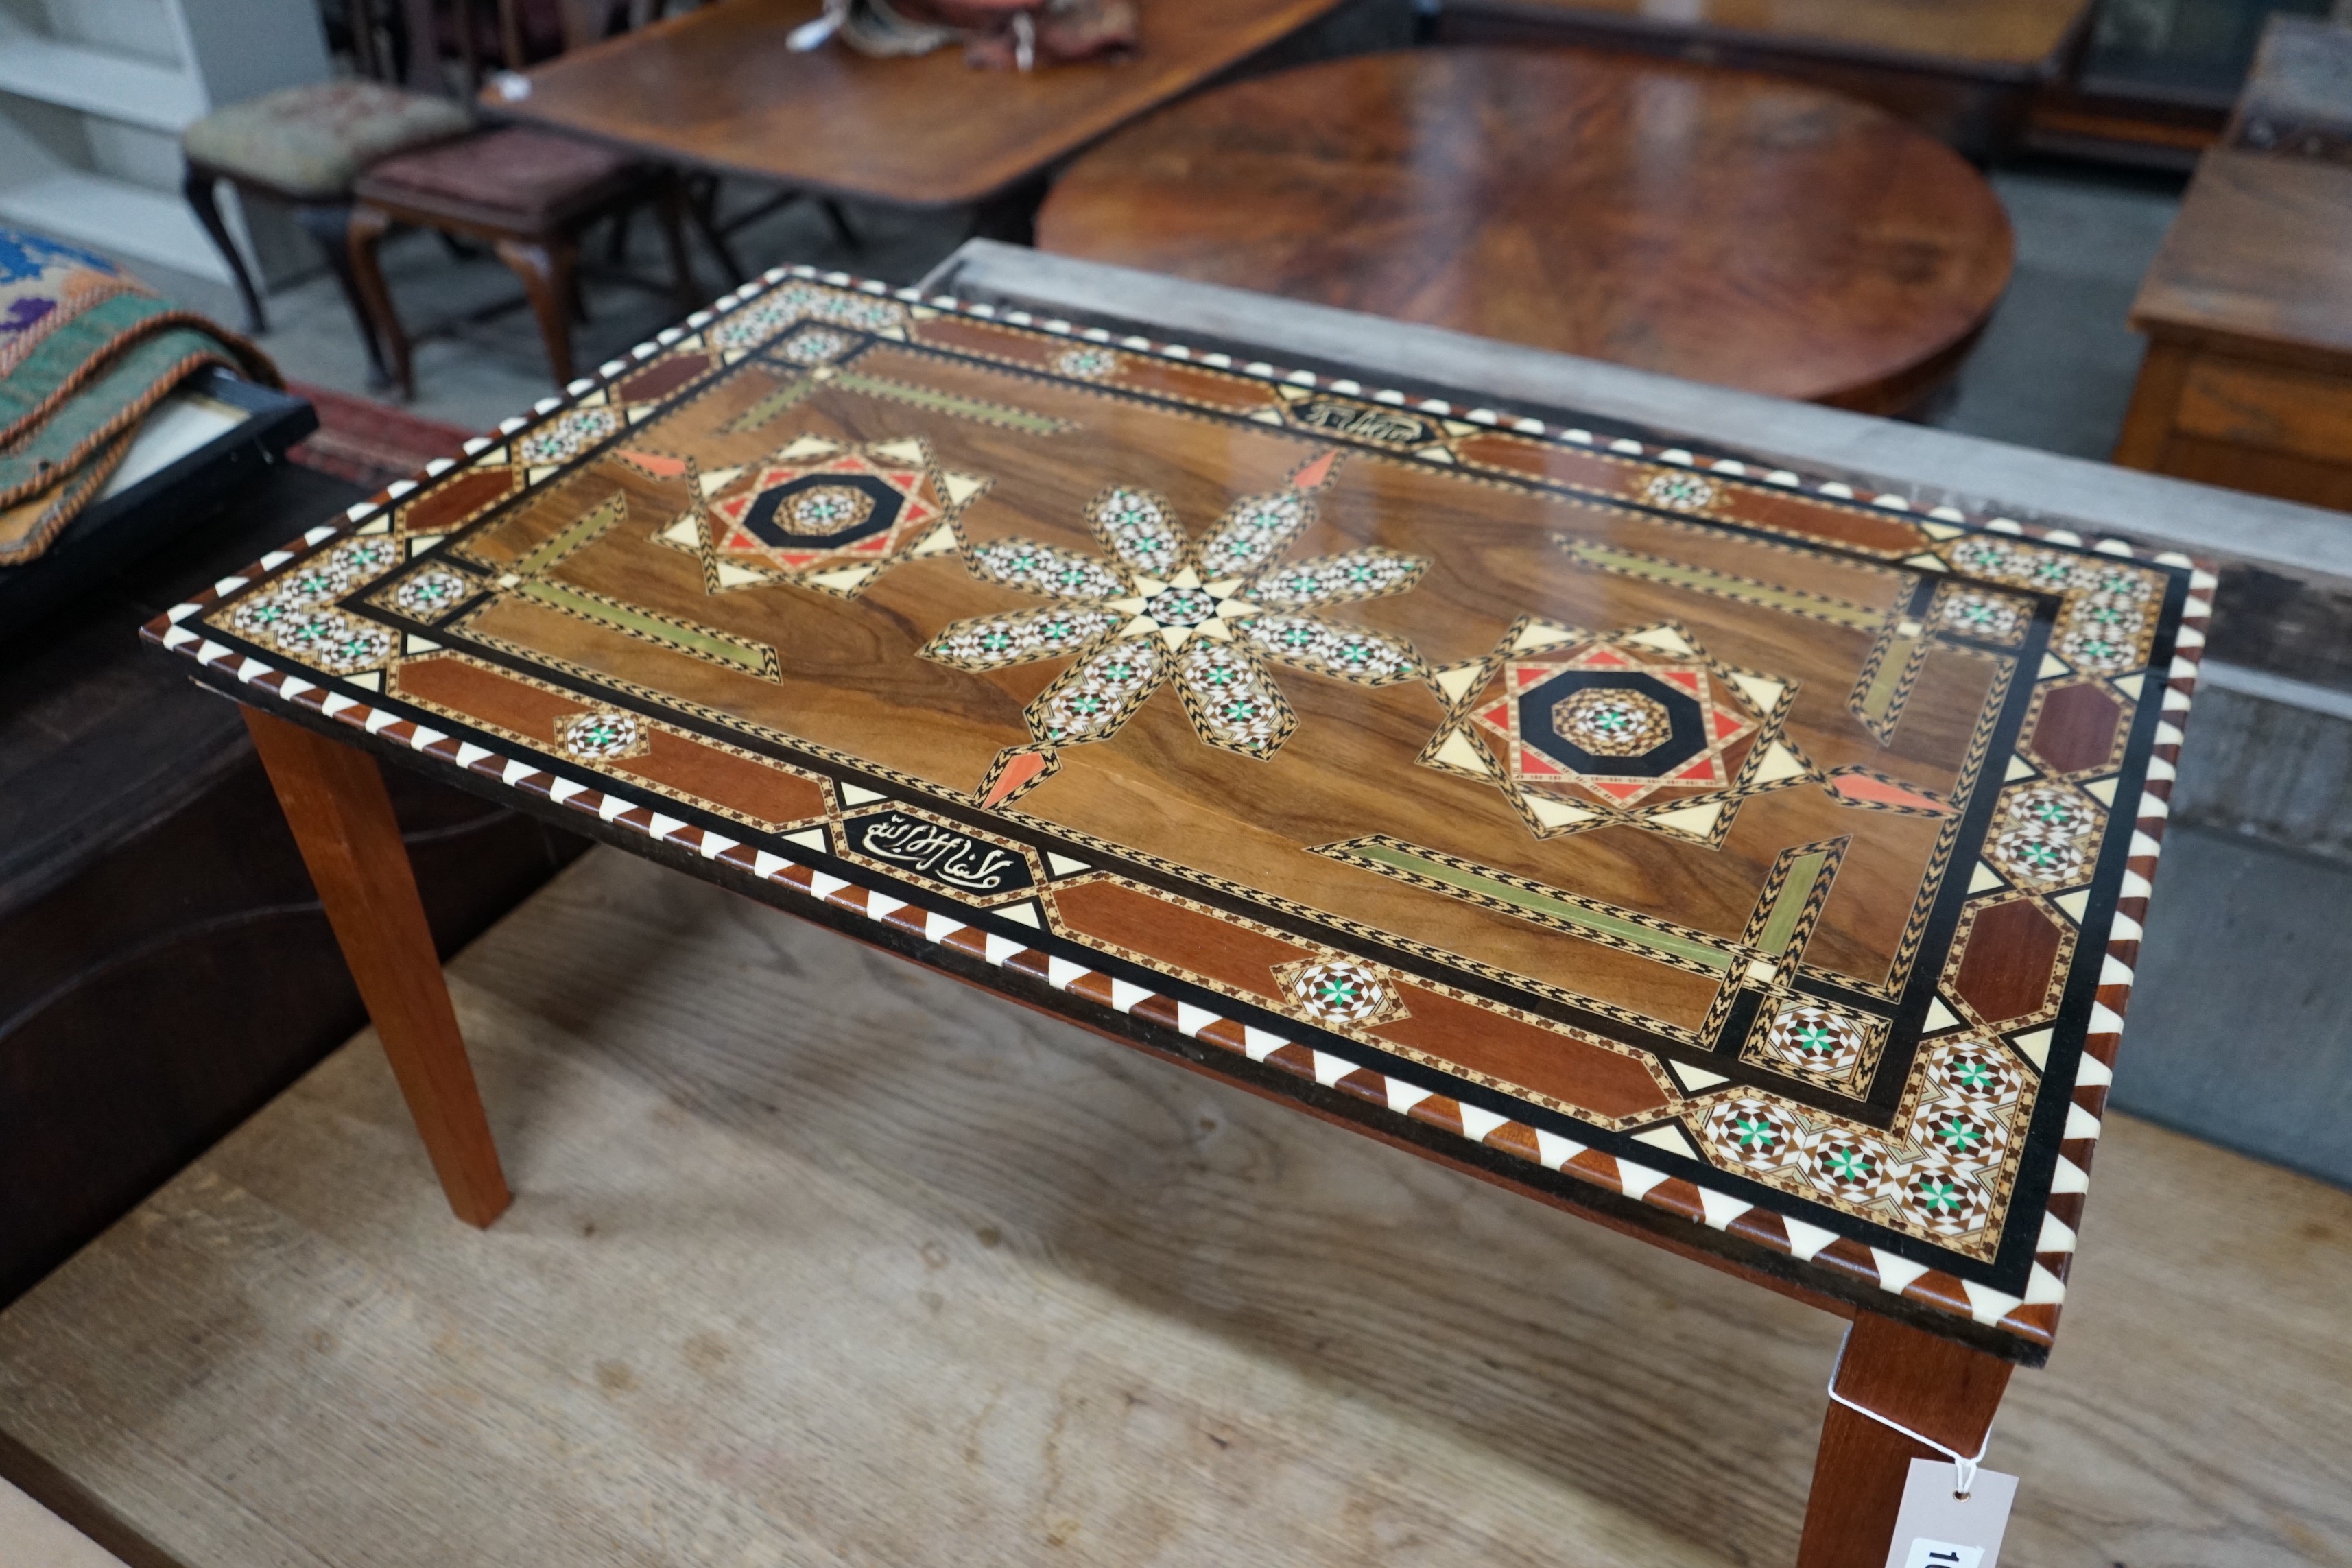 An Eastern rectangular inlaid coffee table, length 85cm, depth 49cm, height 46cm